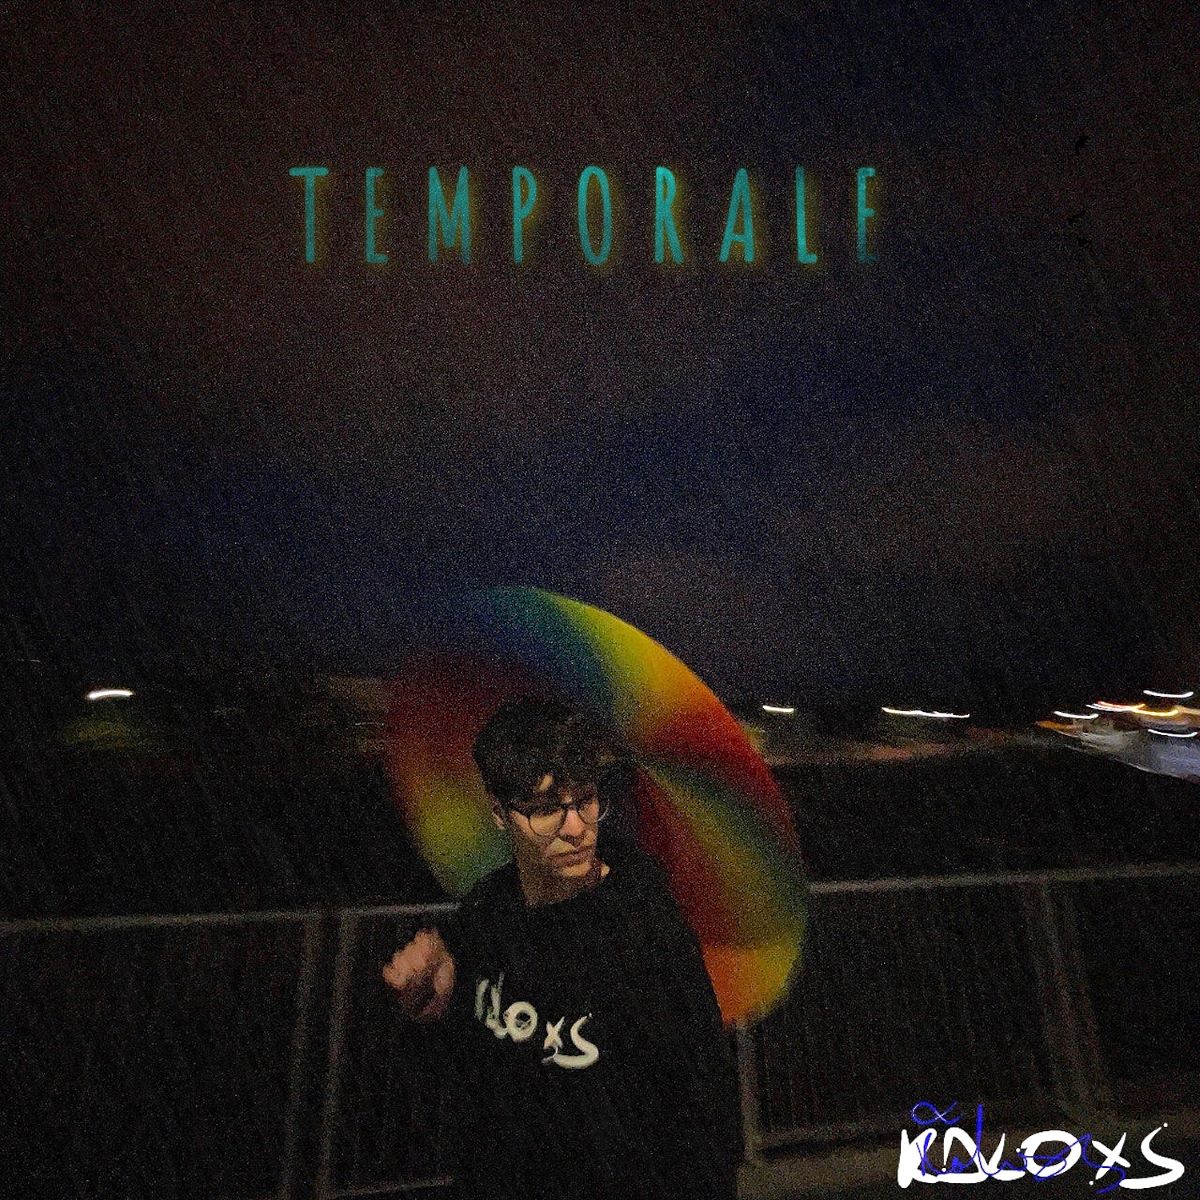 Kaloxs - “Temporale”